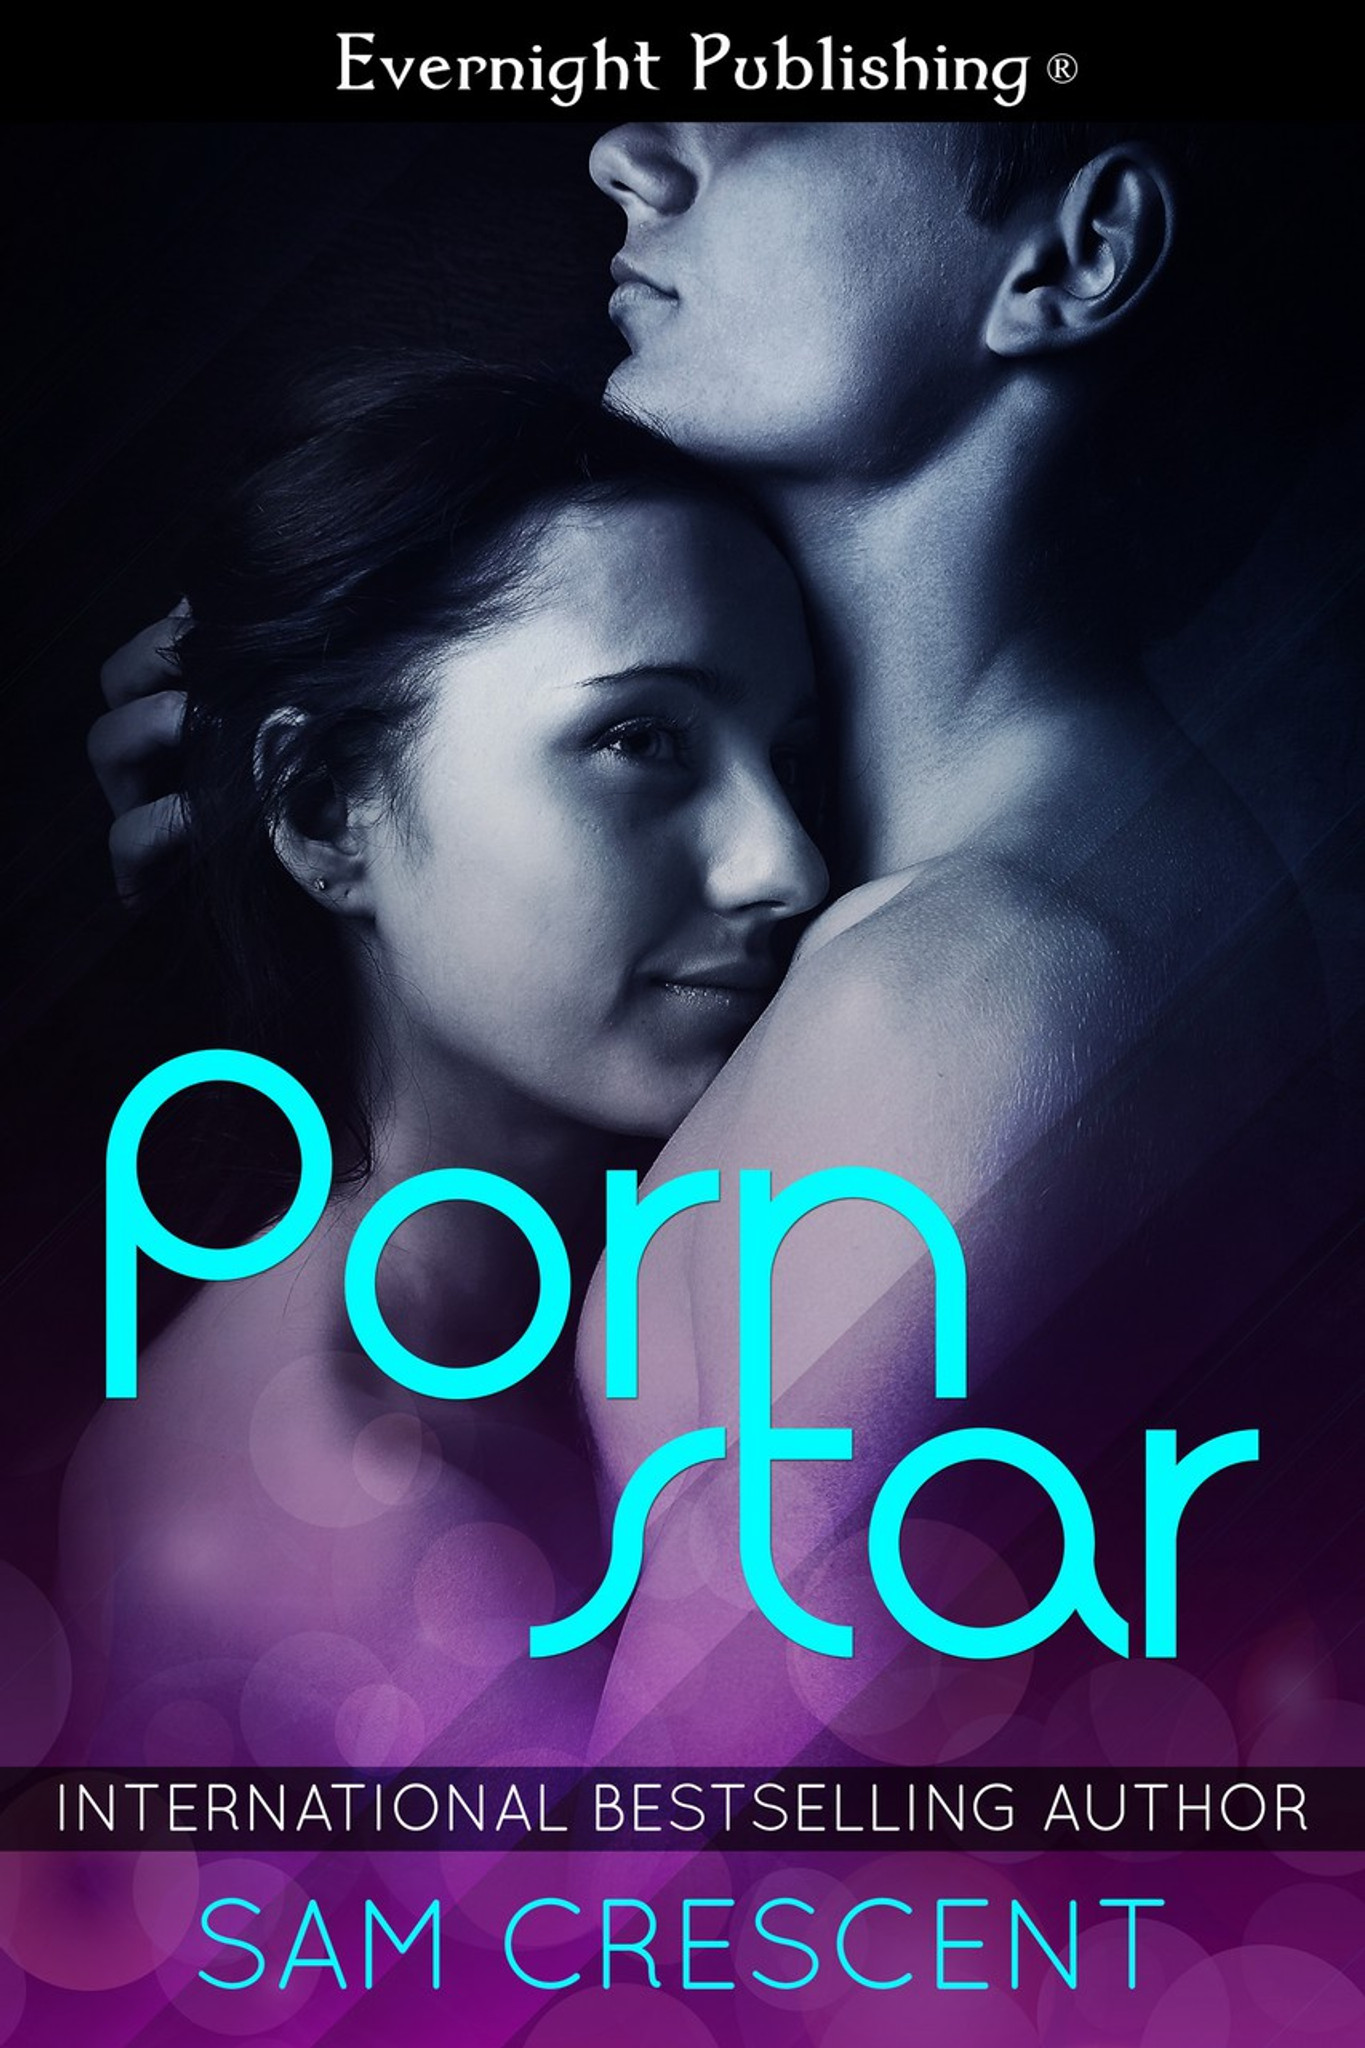 Rubenesque Porn Stars - Porn Star by Sam Crescent - Evernight Publishing